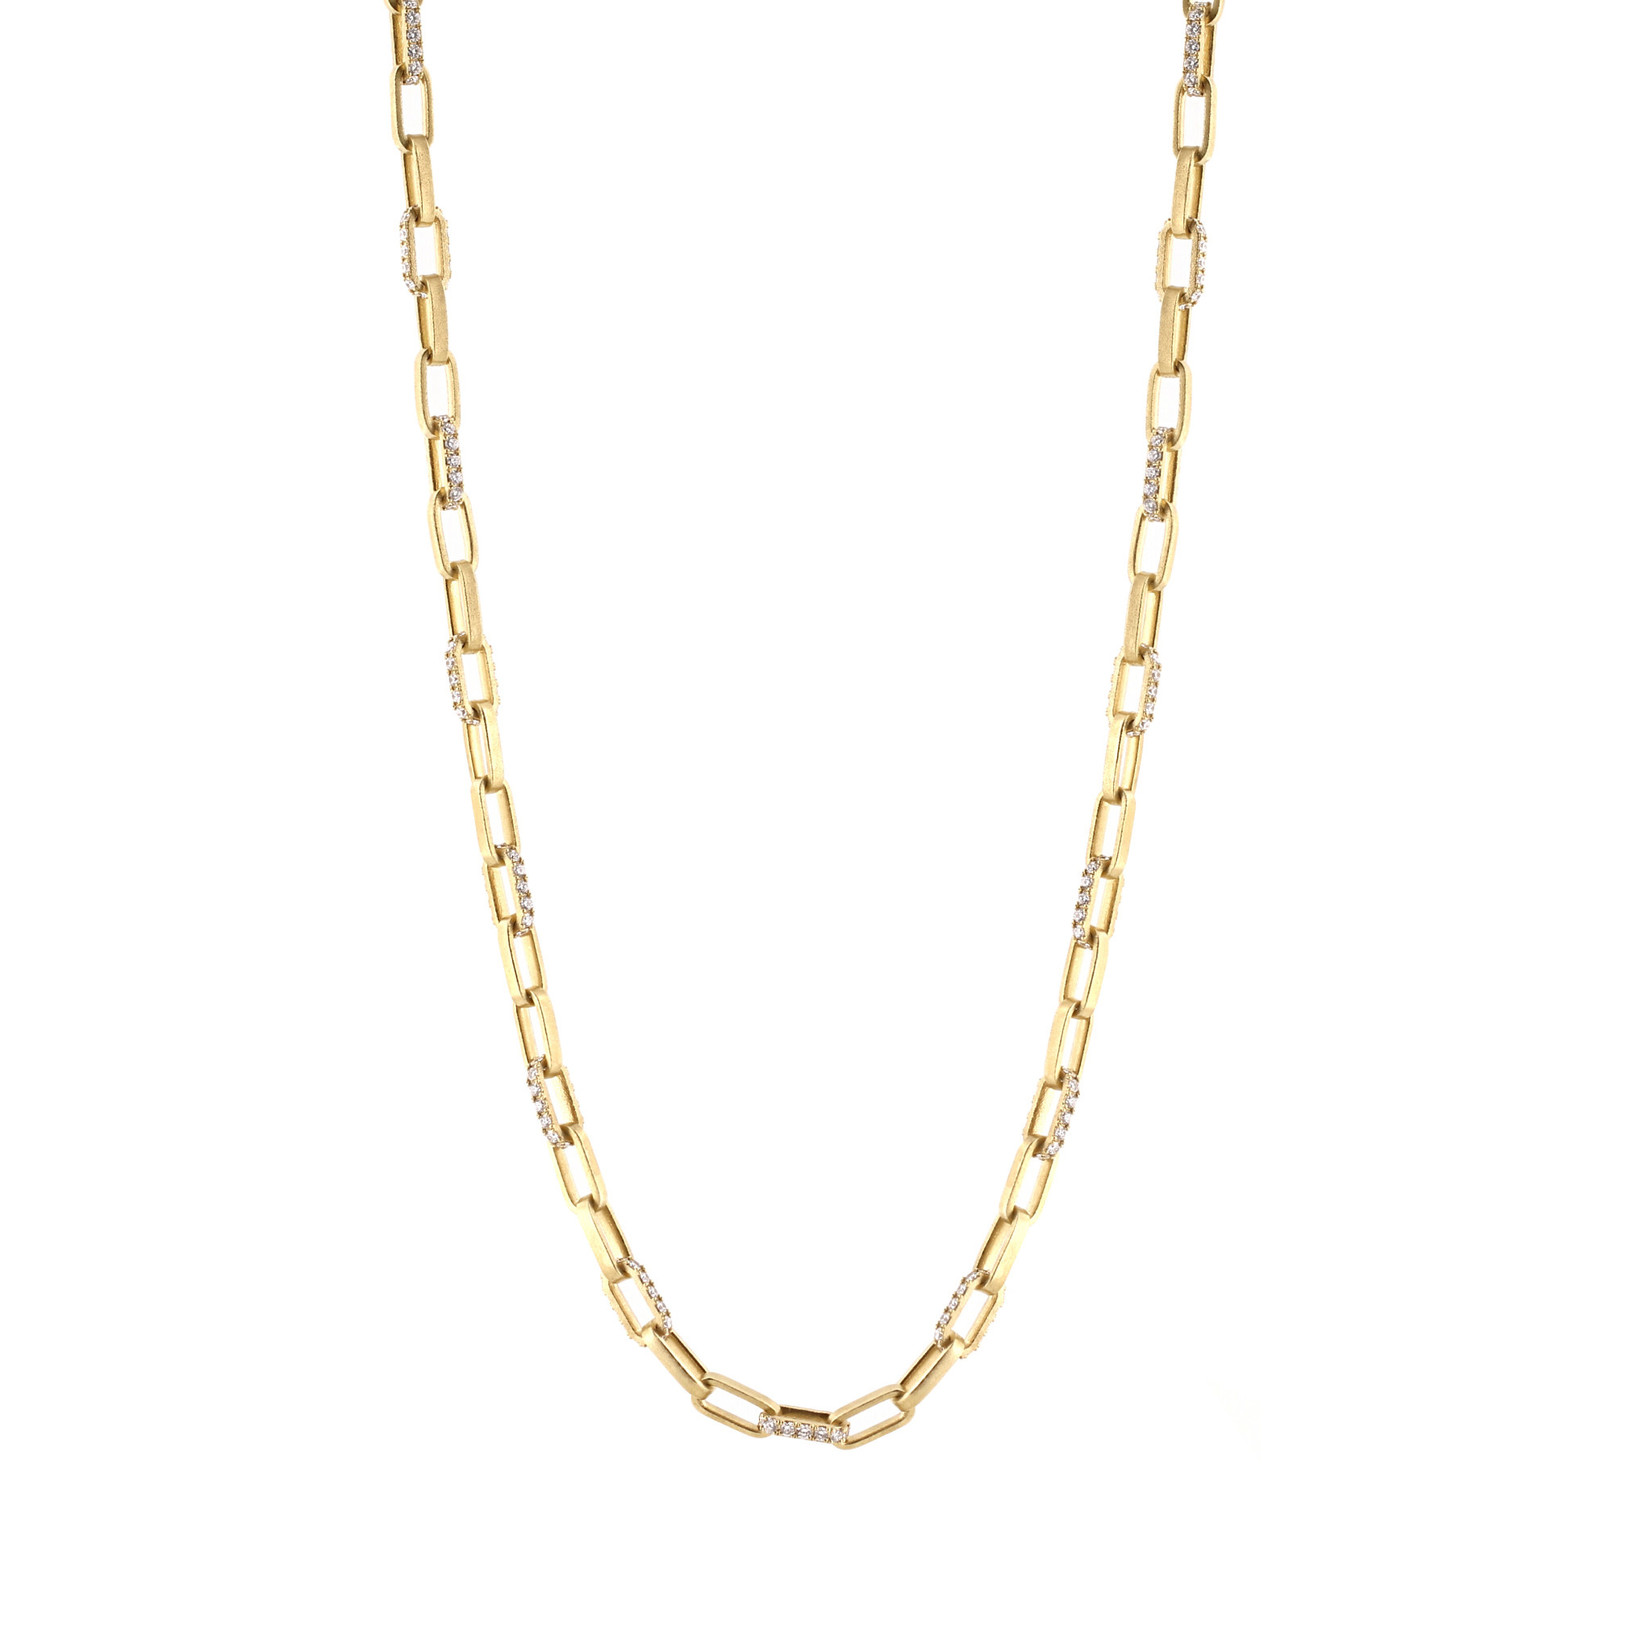 Baxter Moerman Roxy Diamond Link Chain Necklace